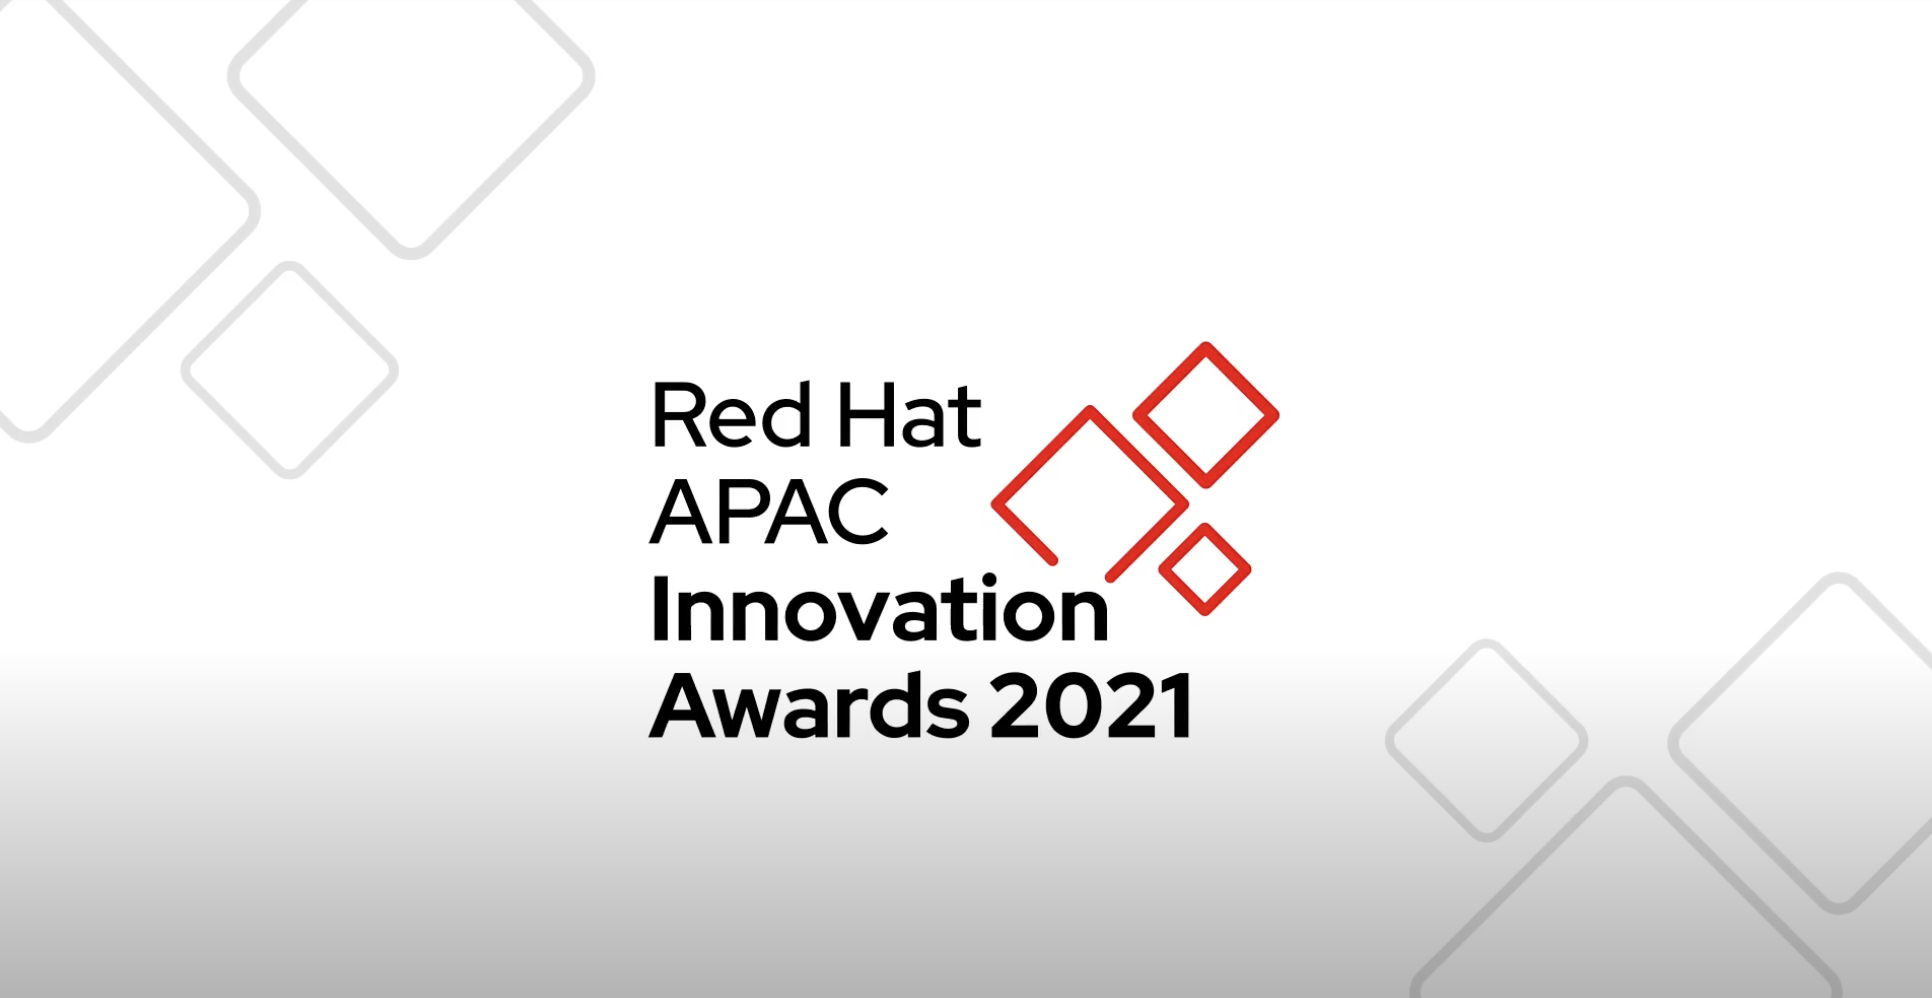 Red Hat APAC Innovation Awards 2021